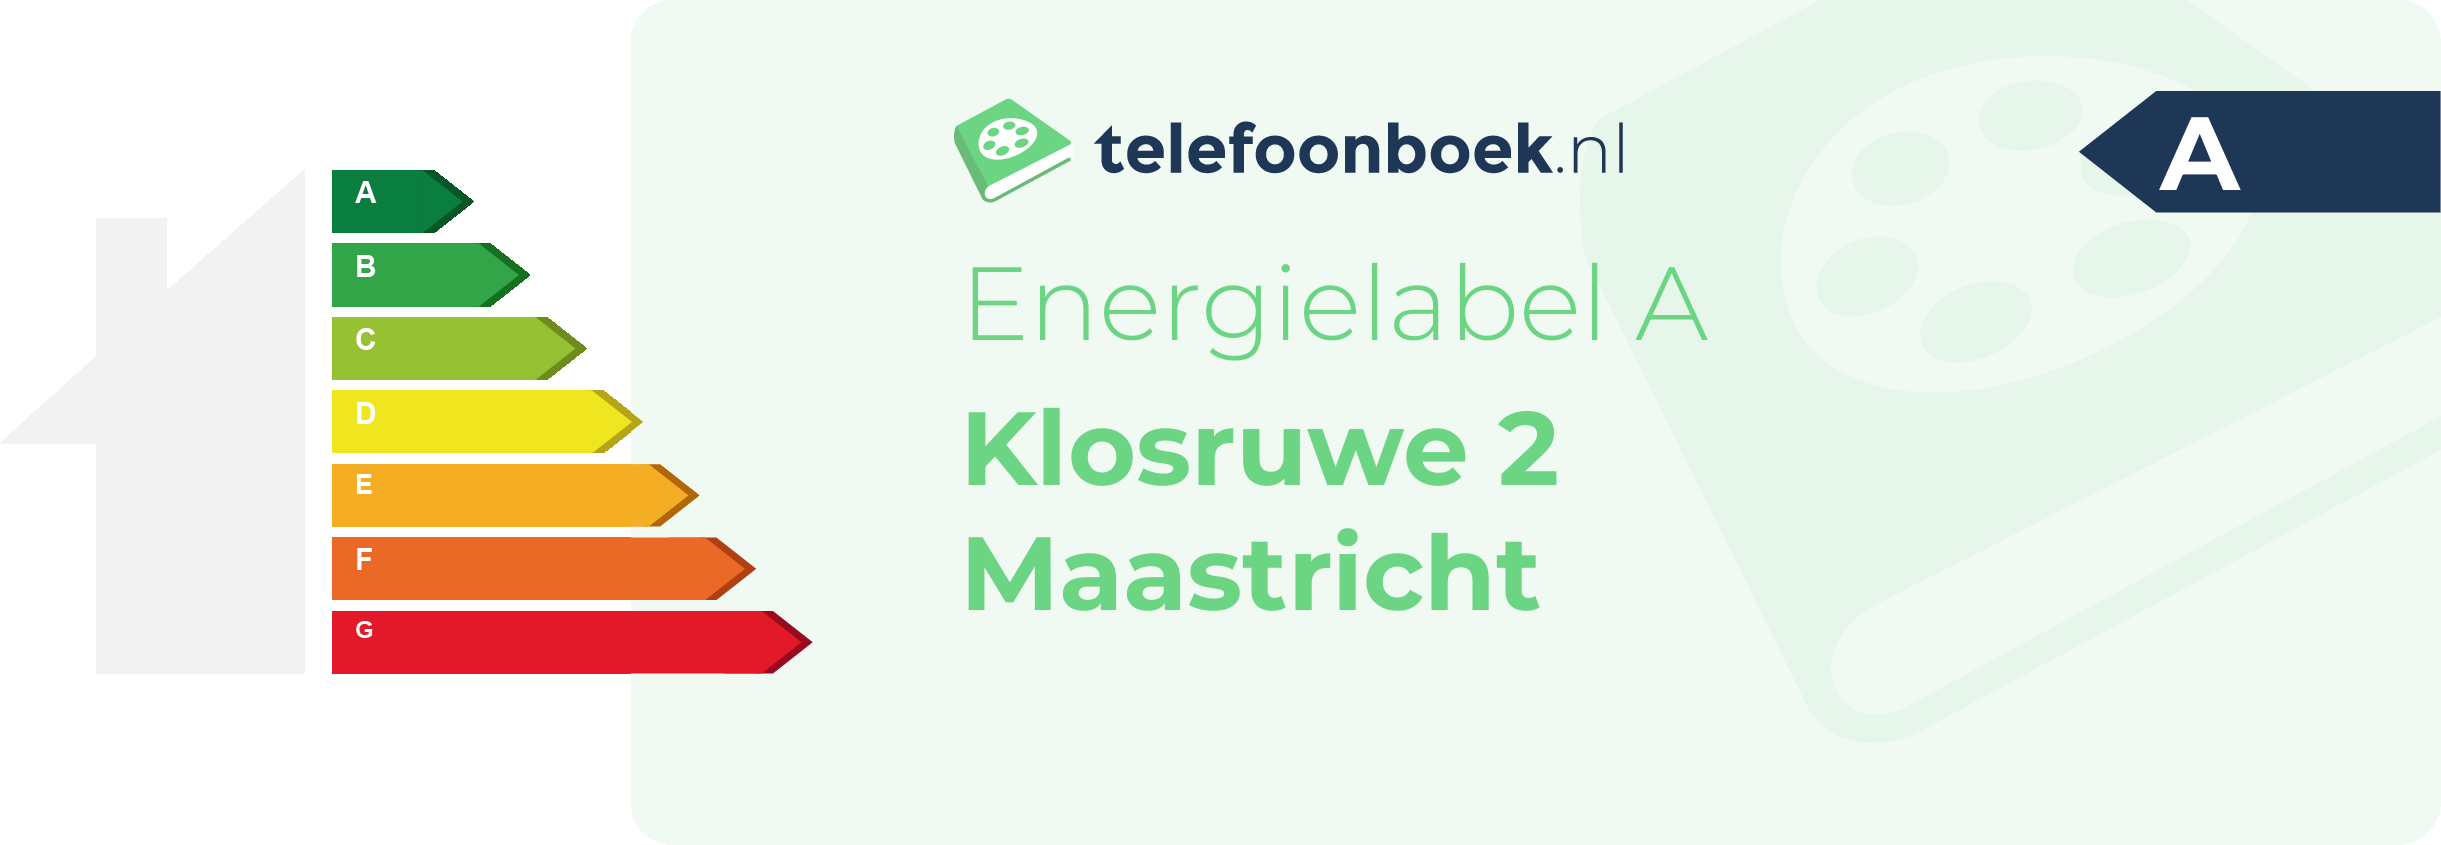 Energielabel Klosruwe 2 Maastricht